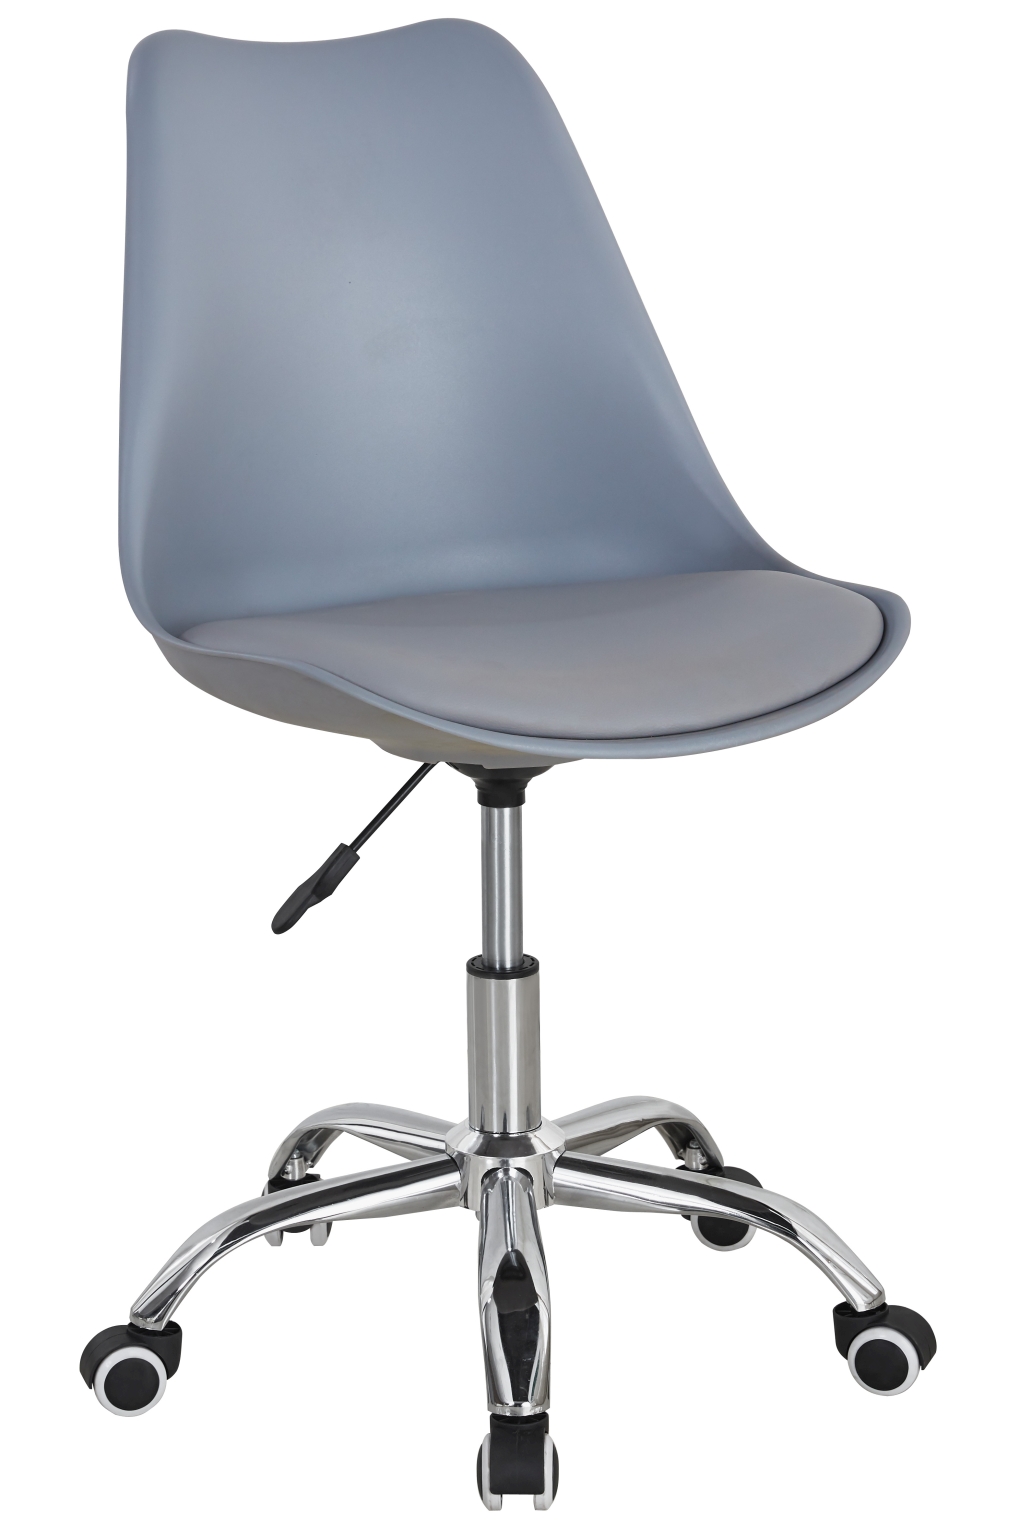 Krzesło obrotowe QZY-402C szare + szara poduszka